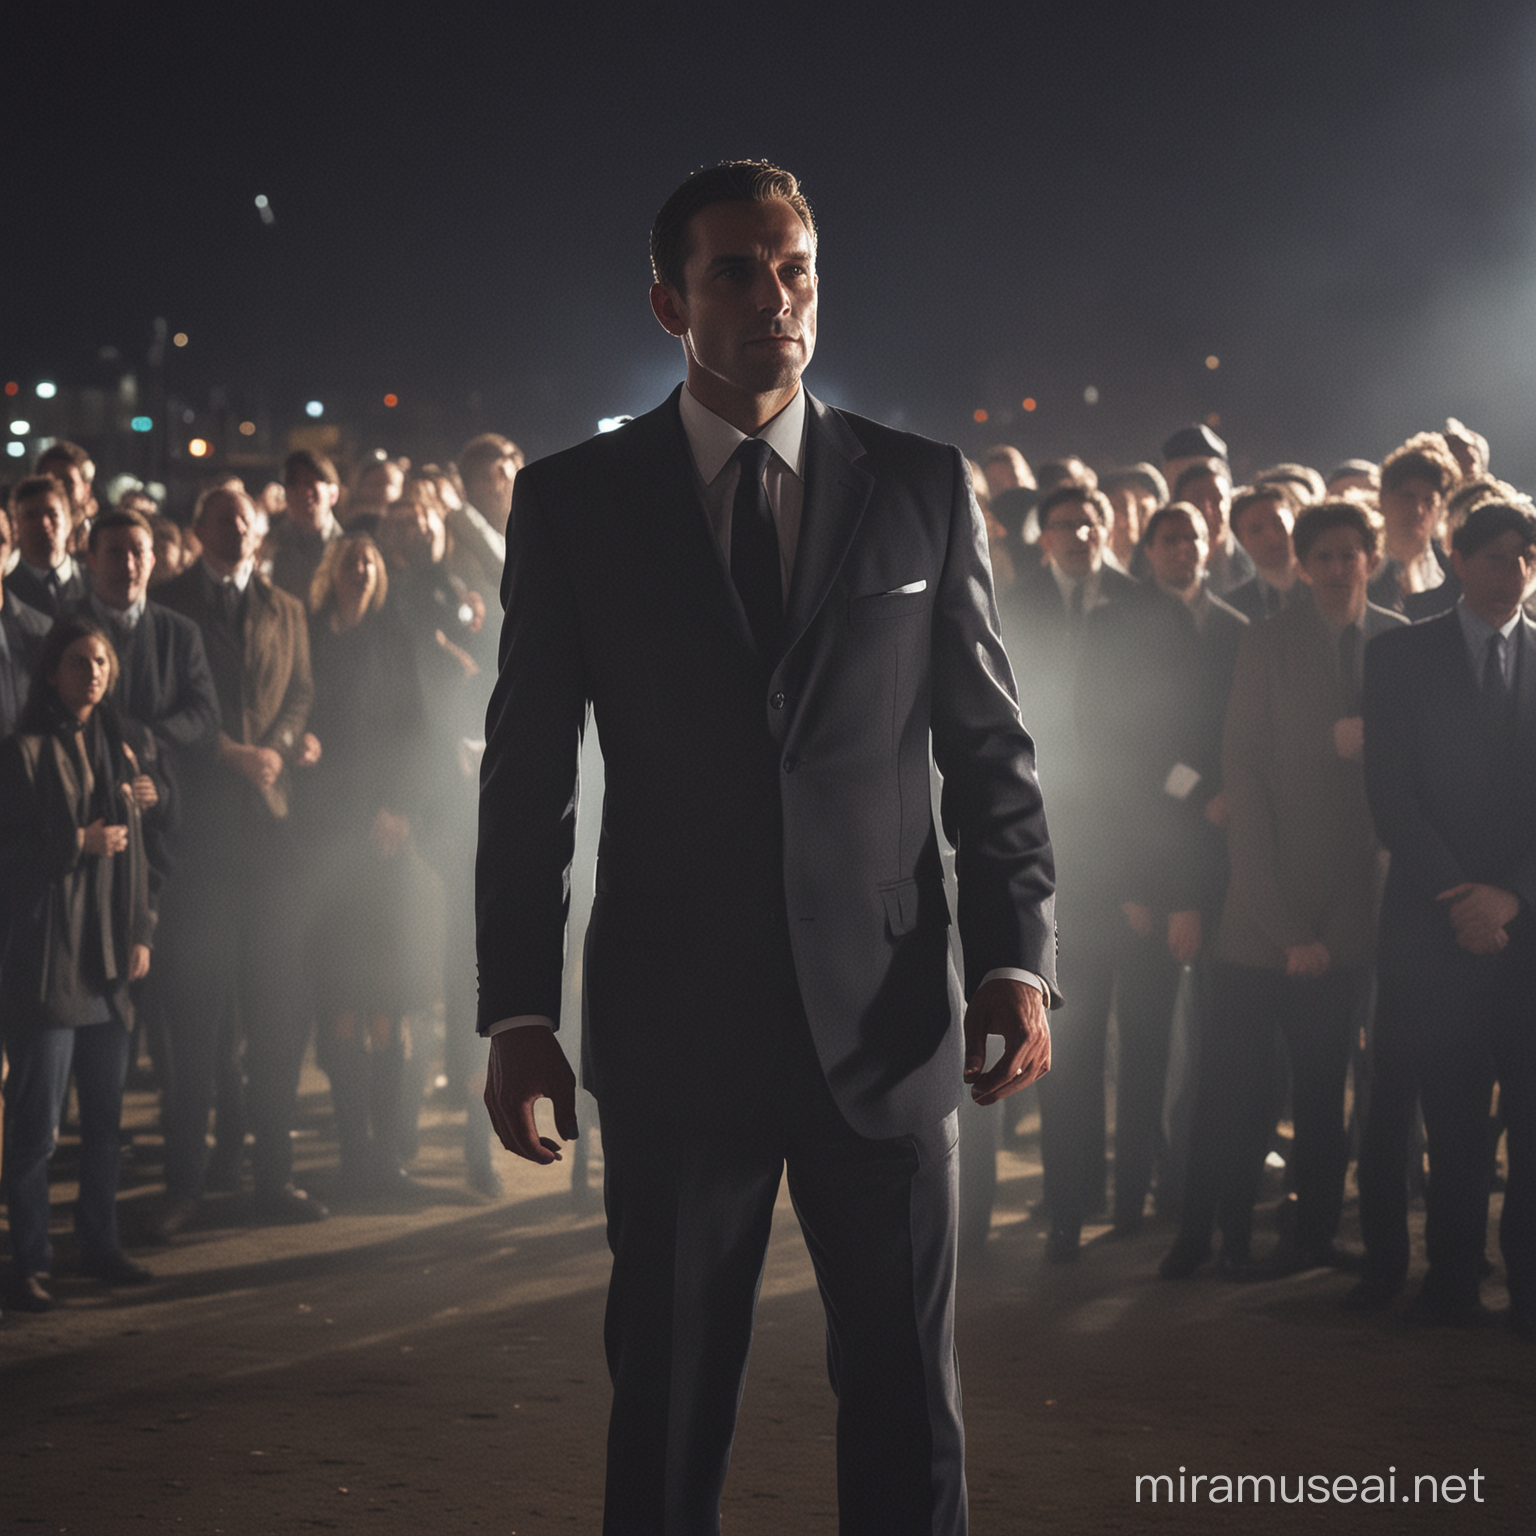 Elegant Man in Suit Illuminated Amidst Crowded Night Scene